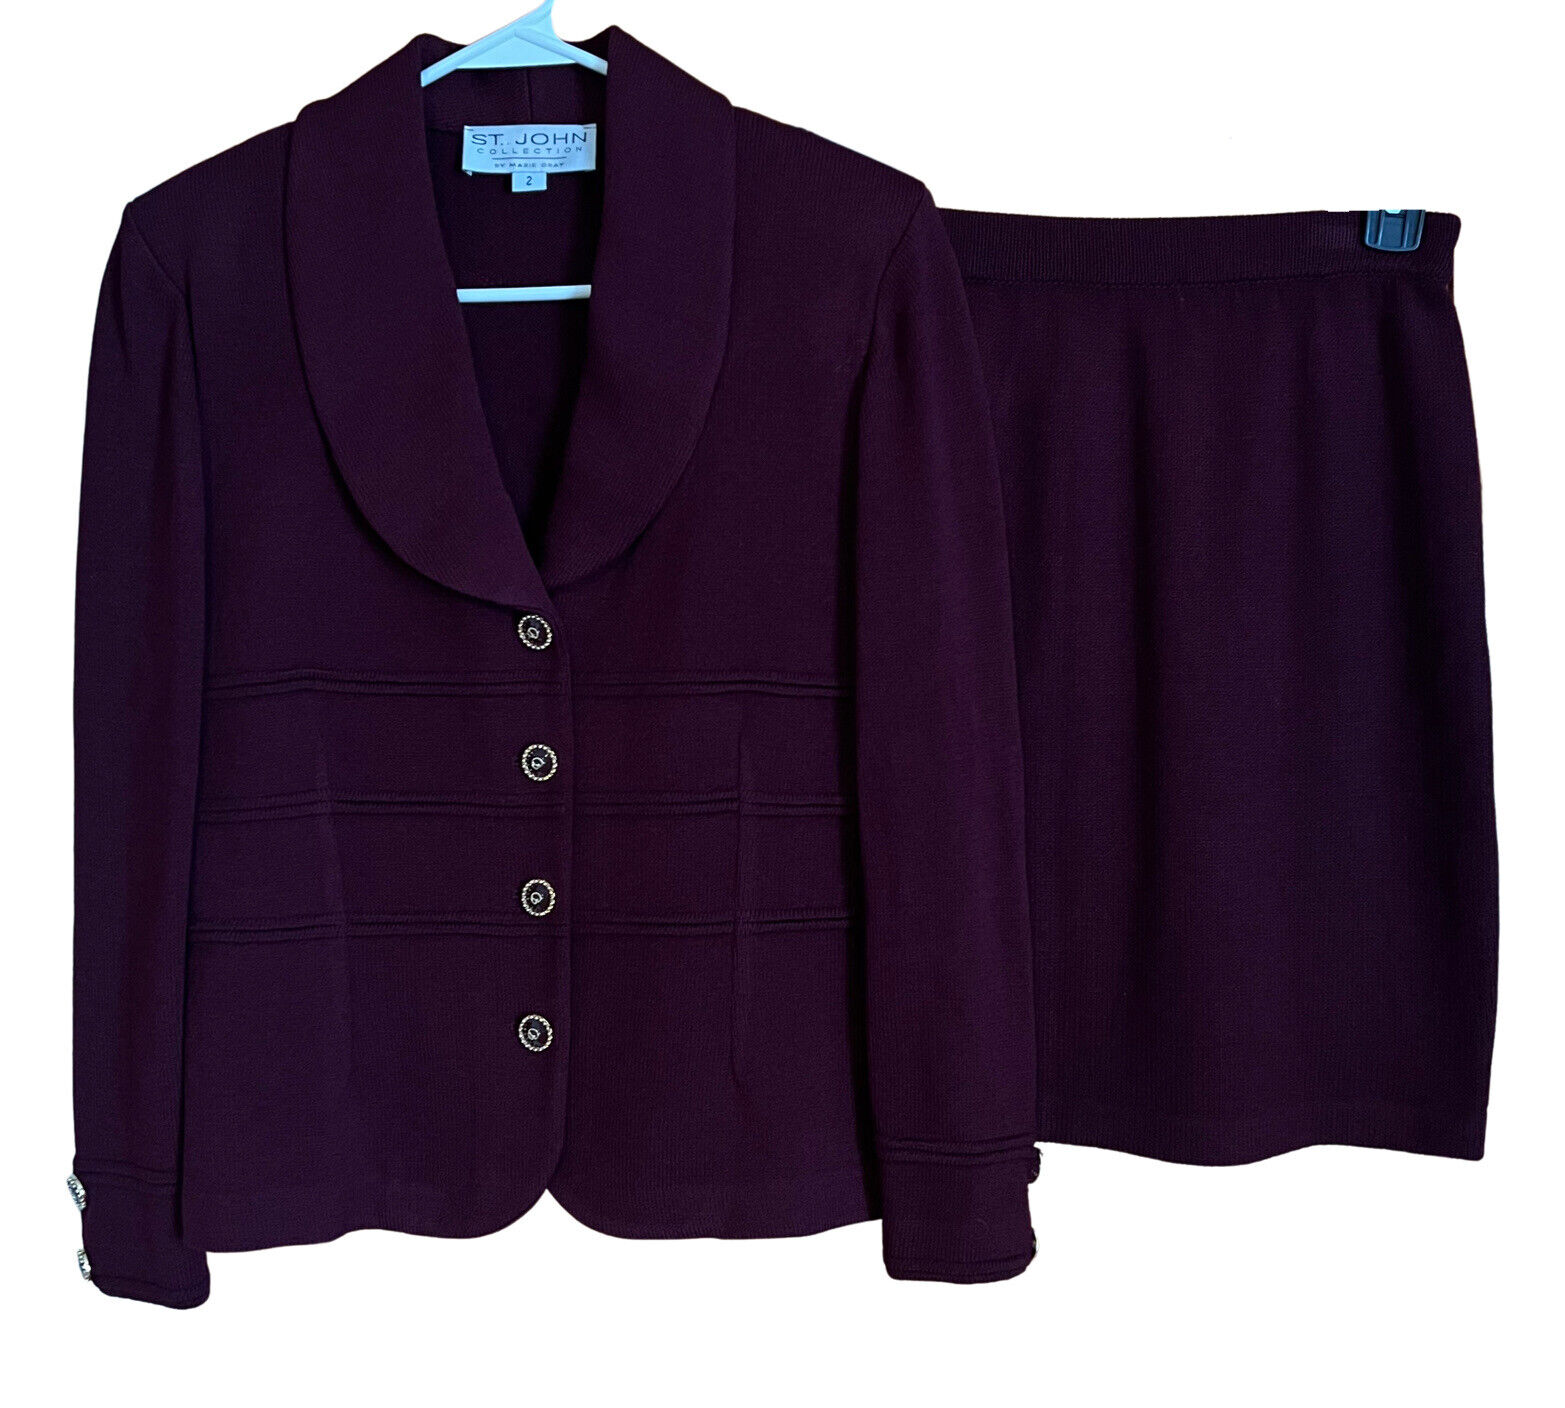 St. John Collection Marie Gray Suit Jacket 2 & Skirt 4 Purple Gold Button Size